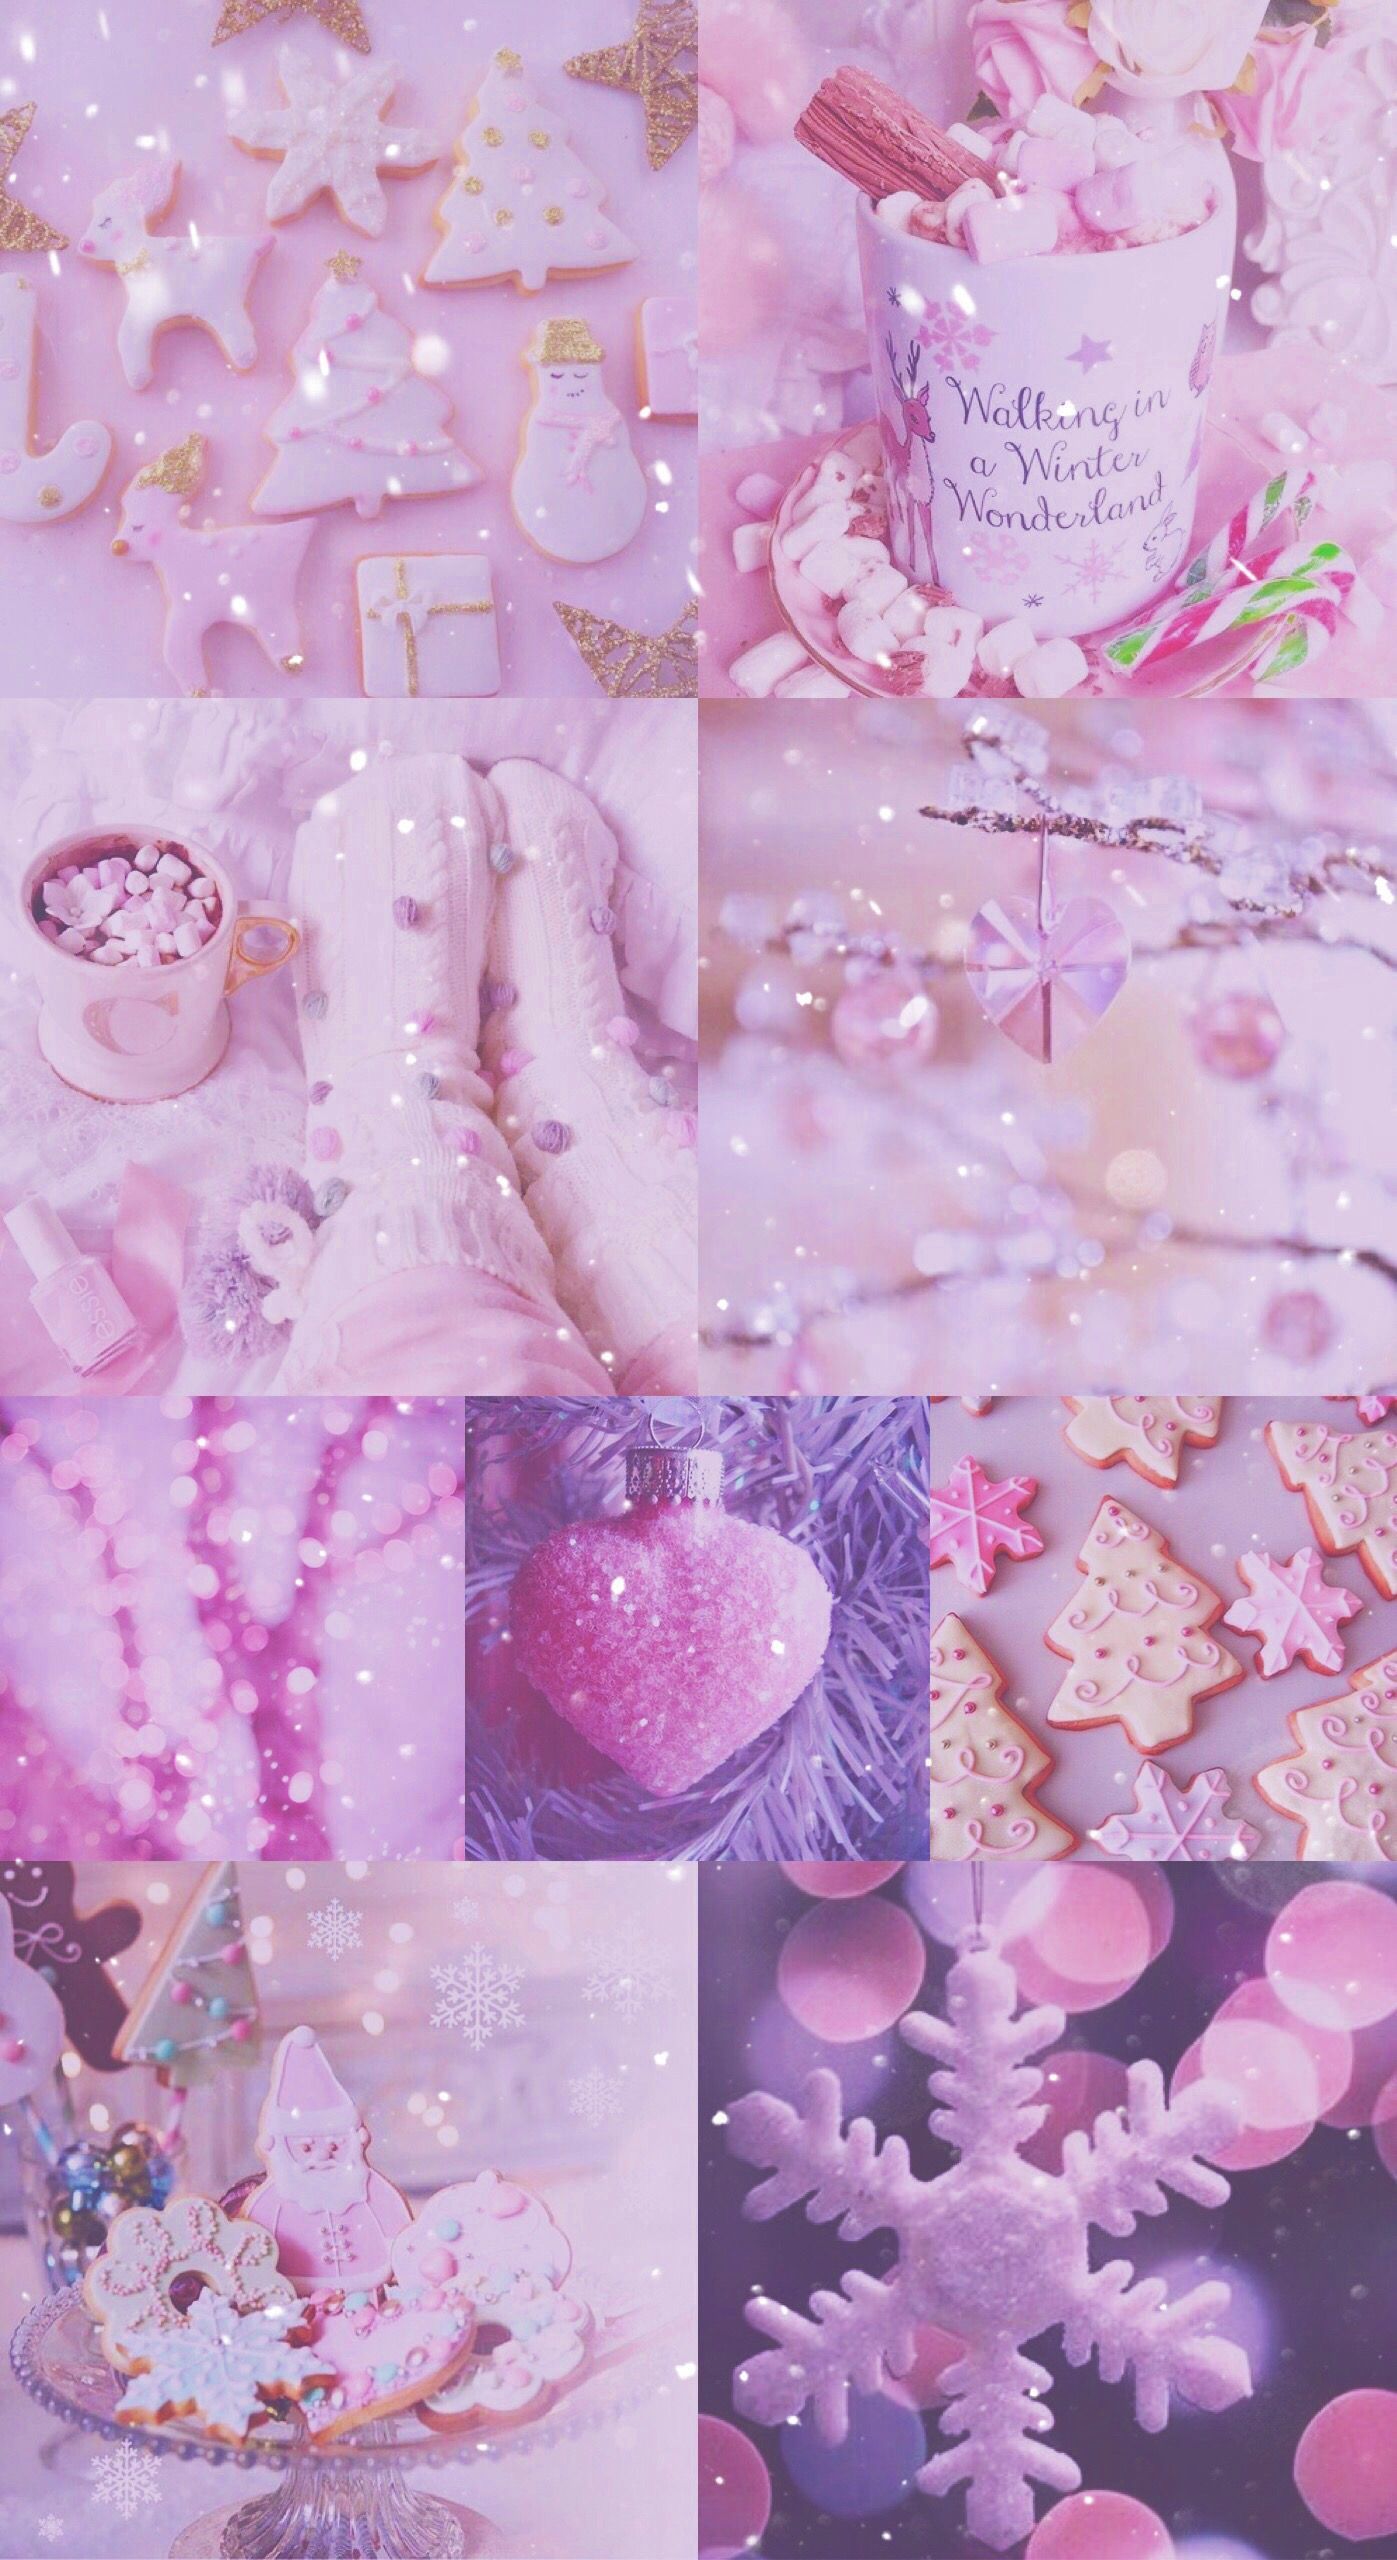 xmas, Christmas, pink, pretty, sparkly, glitter, white, iPhone, background. Papeis de parede fofinhos, para iphone, Wallpaper bonitos